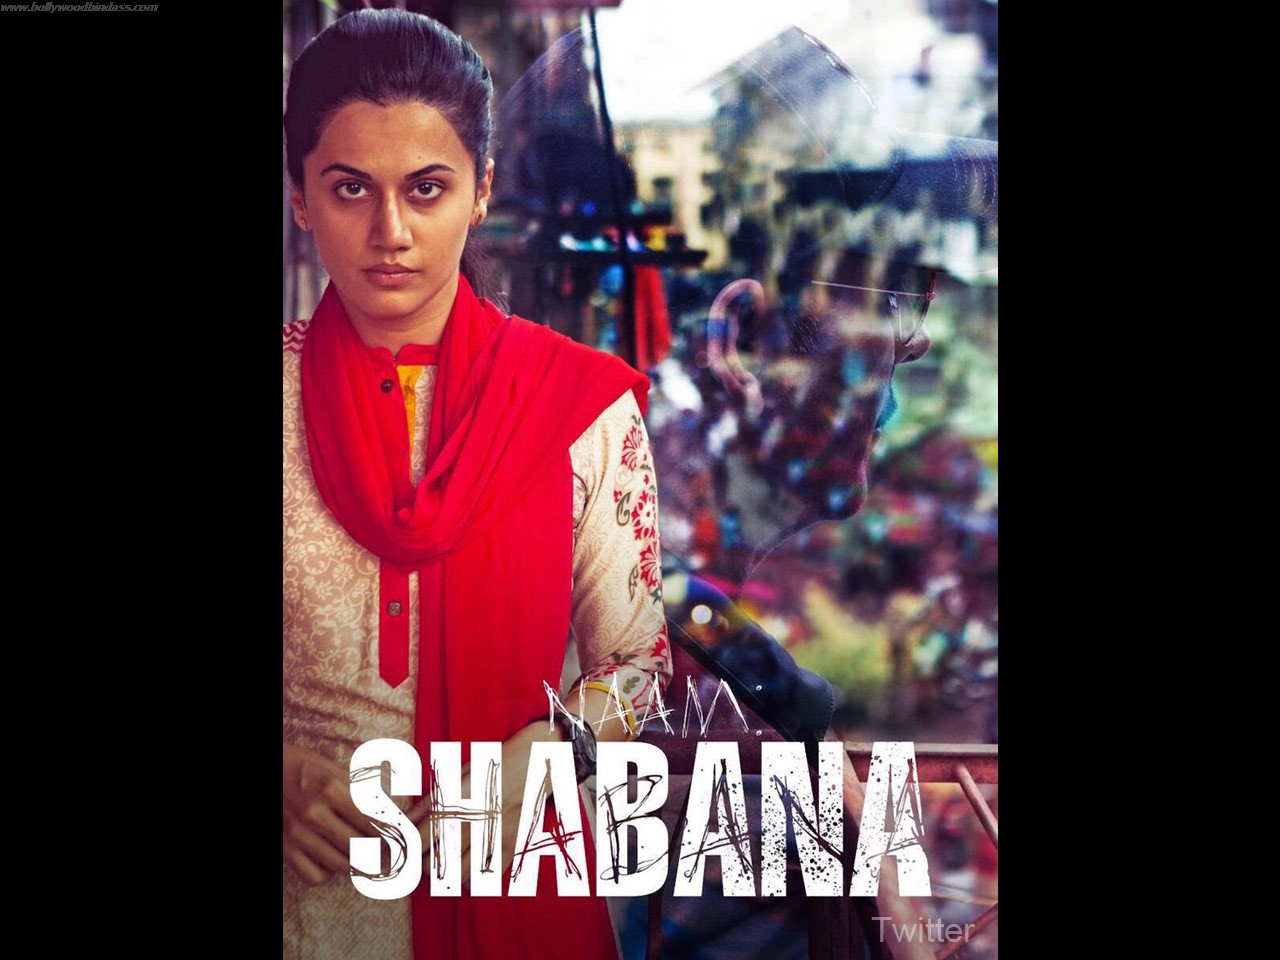 shabana name wallpaper,personas,moda,ropa formal,frio,sari